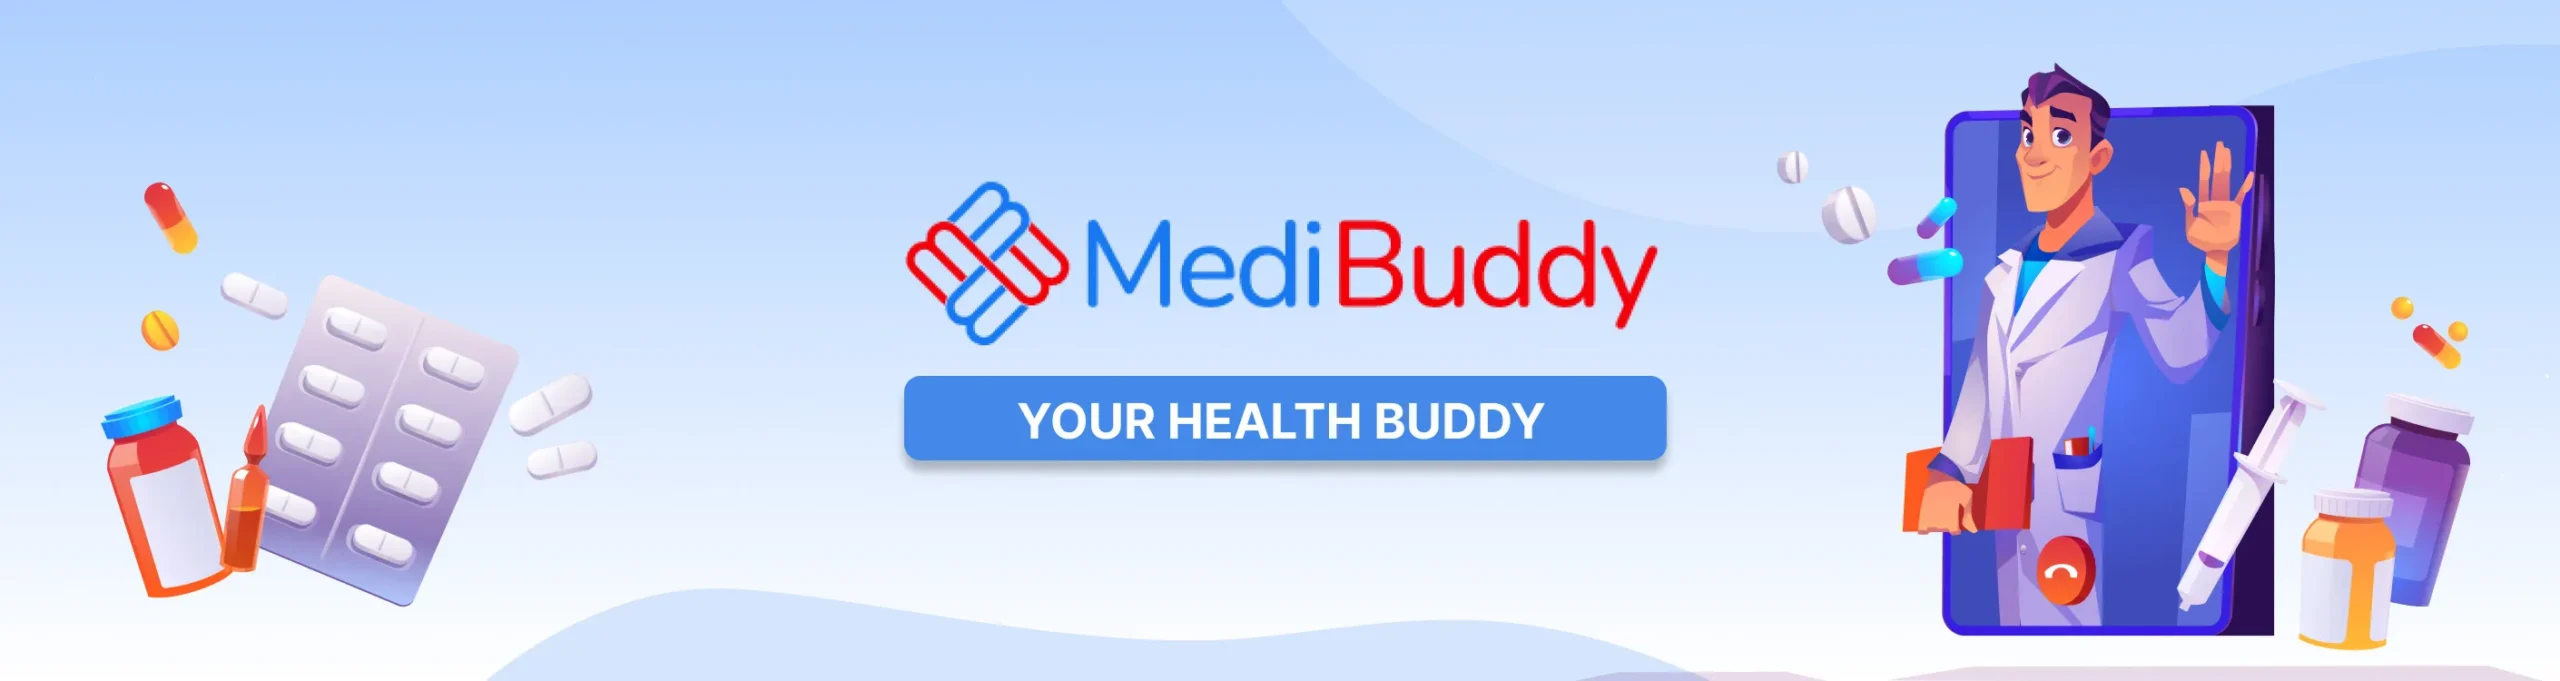 Medi Buddy - MRI Testing : Get Upto 50% OFF